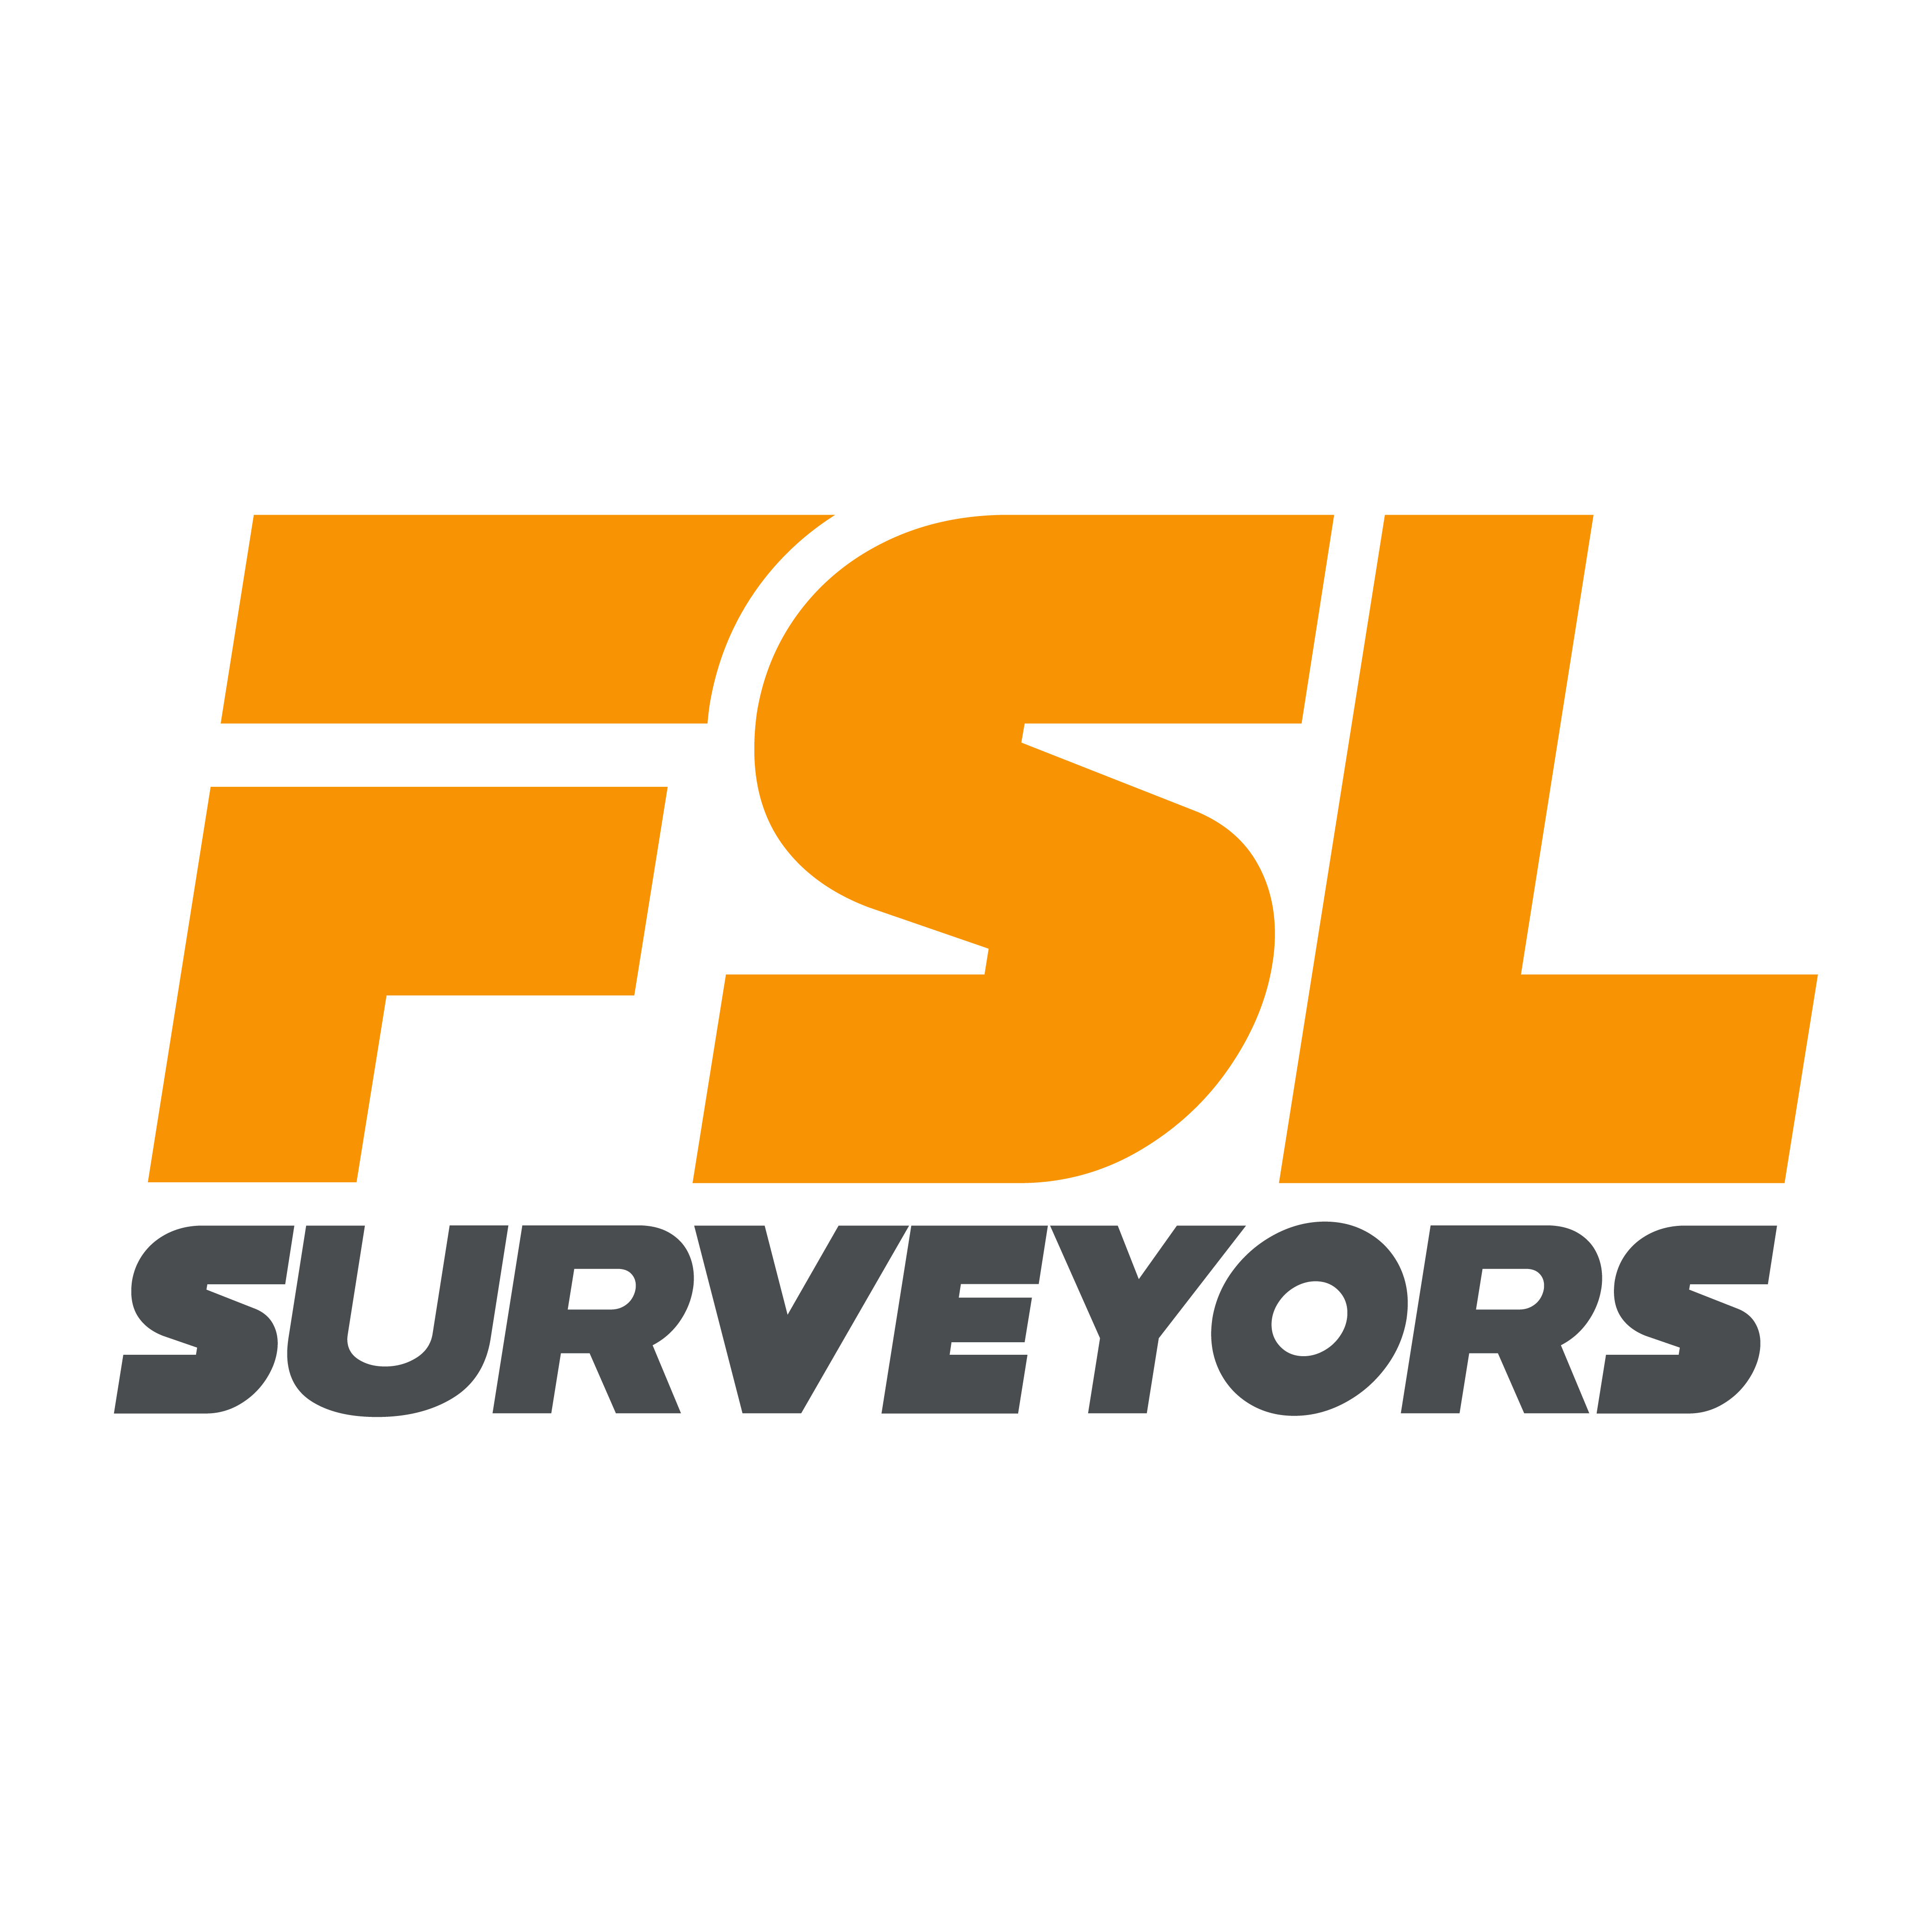 Fatuvalu surveyors logo 1